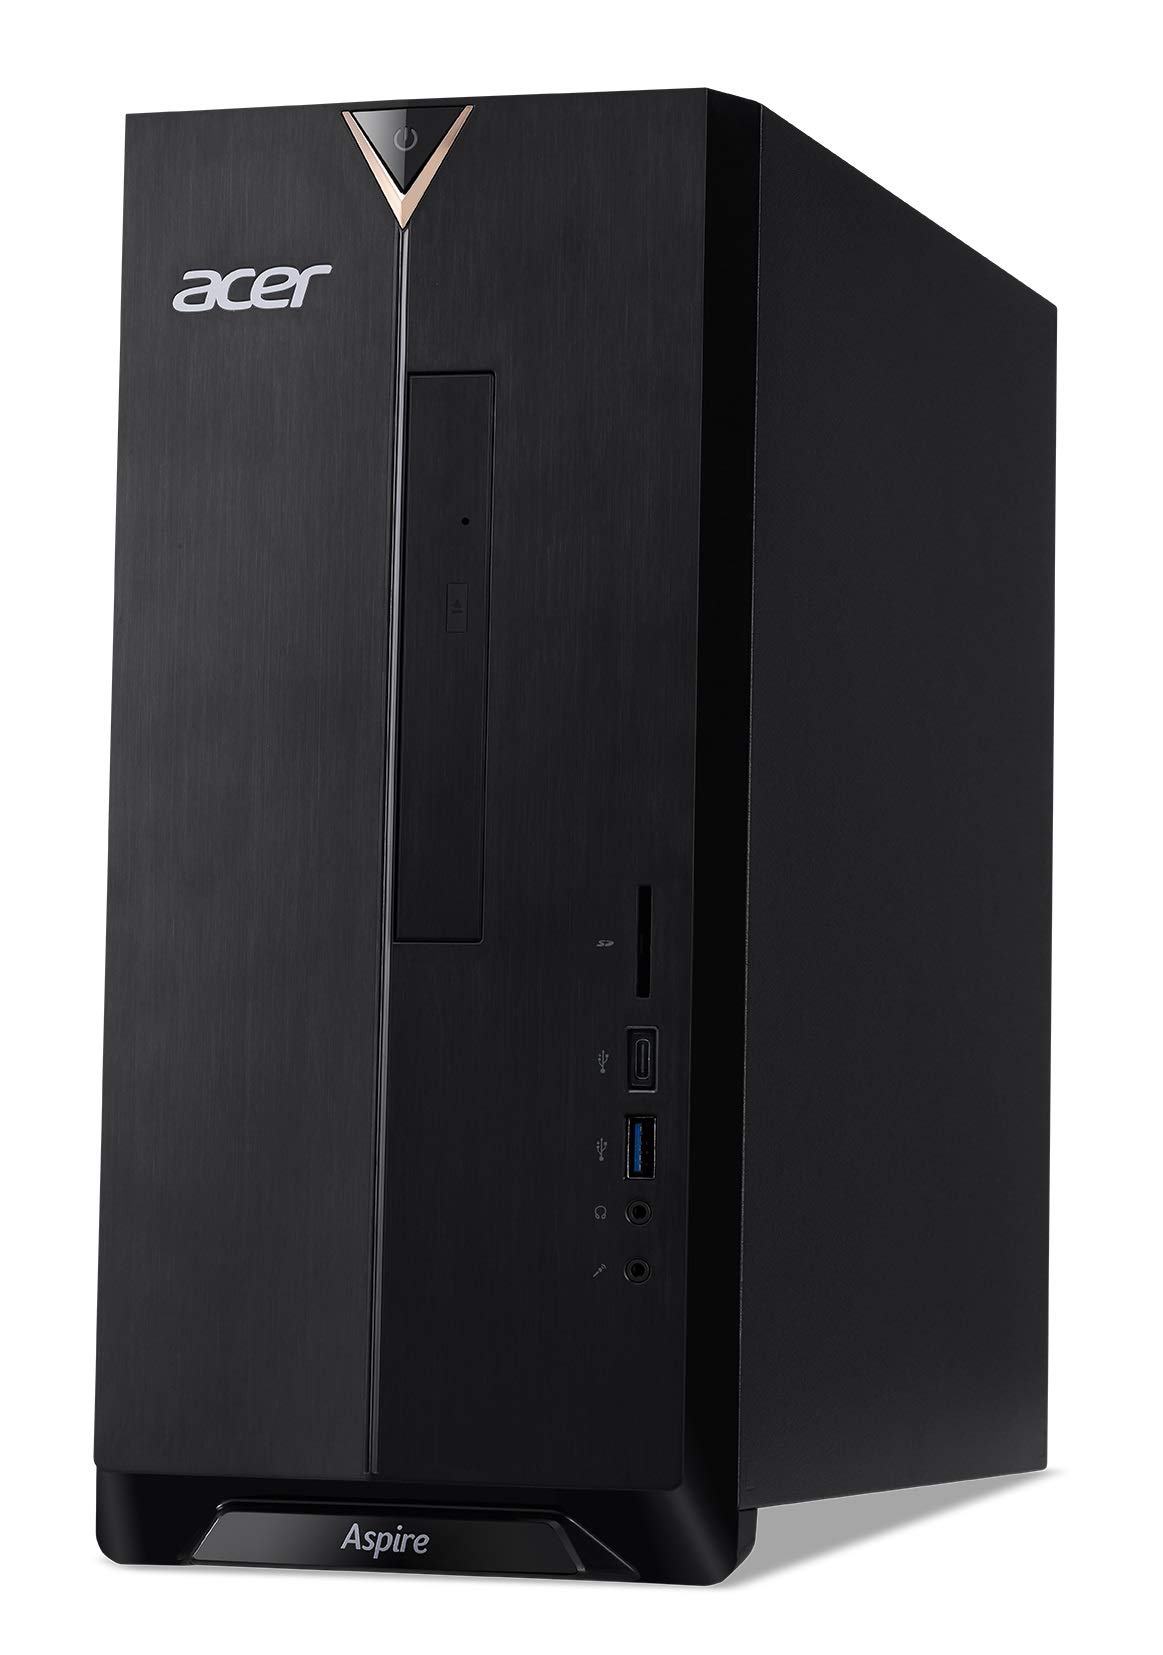 Acer Aspire TC-895-UA92 Desktop, 10th Gen Intel Core i5-10400 6-Core Processor, 12GB 2666MHz DDR4, 512GB NVMe M.2 SSD, 8X DVD, 802.11ax Wi-Fi 6, USB 3.2 Type C, Windows 10 Home